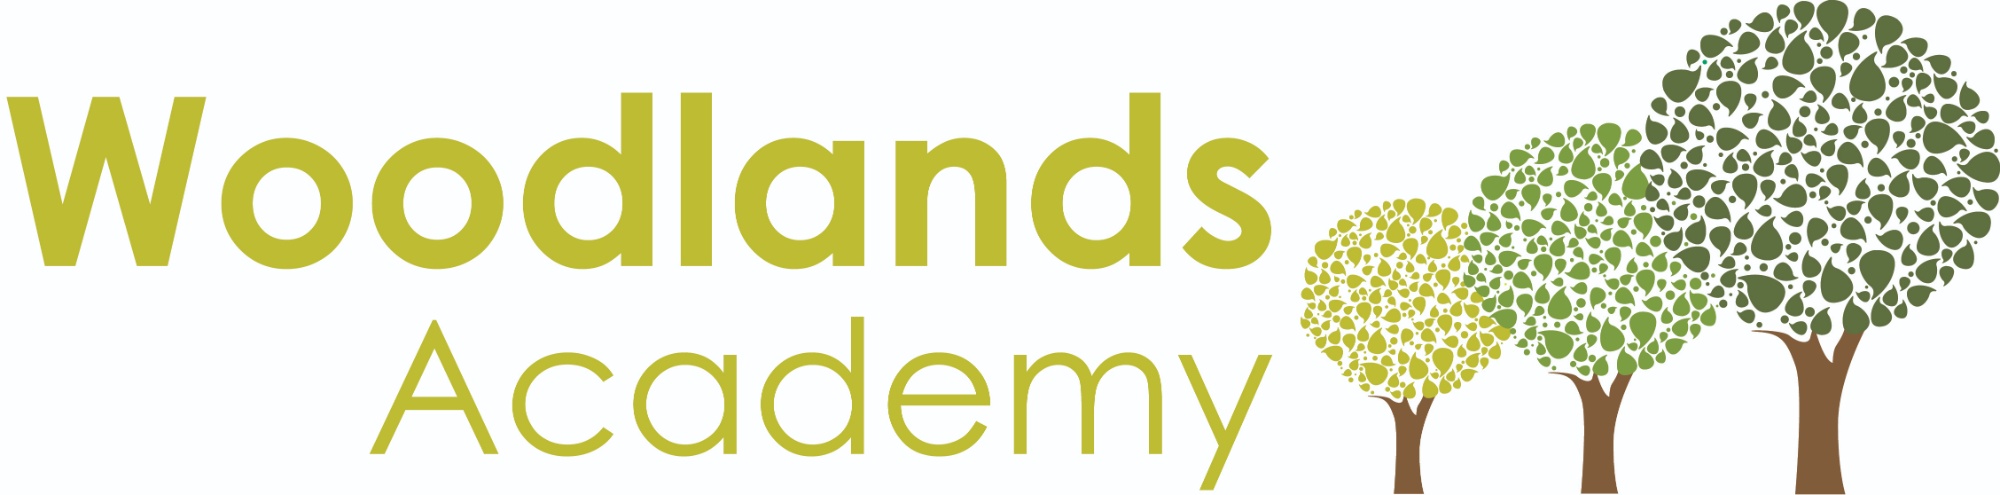 Woodlands Academy